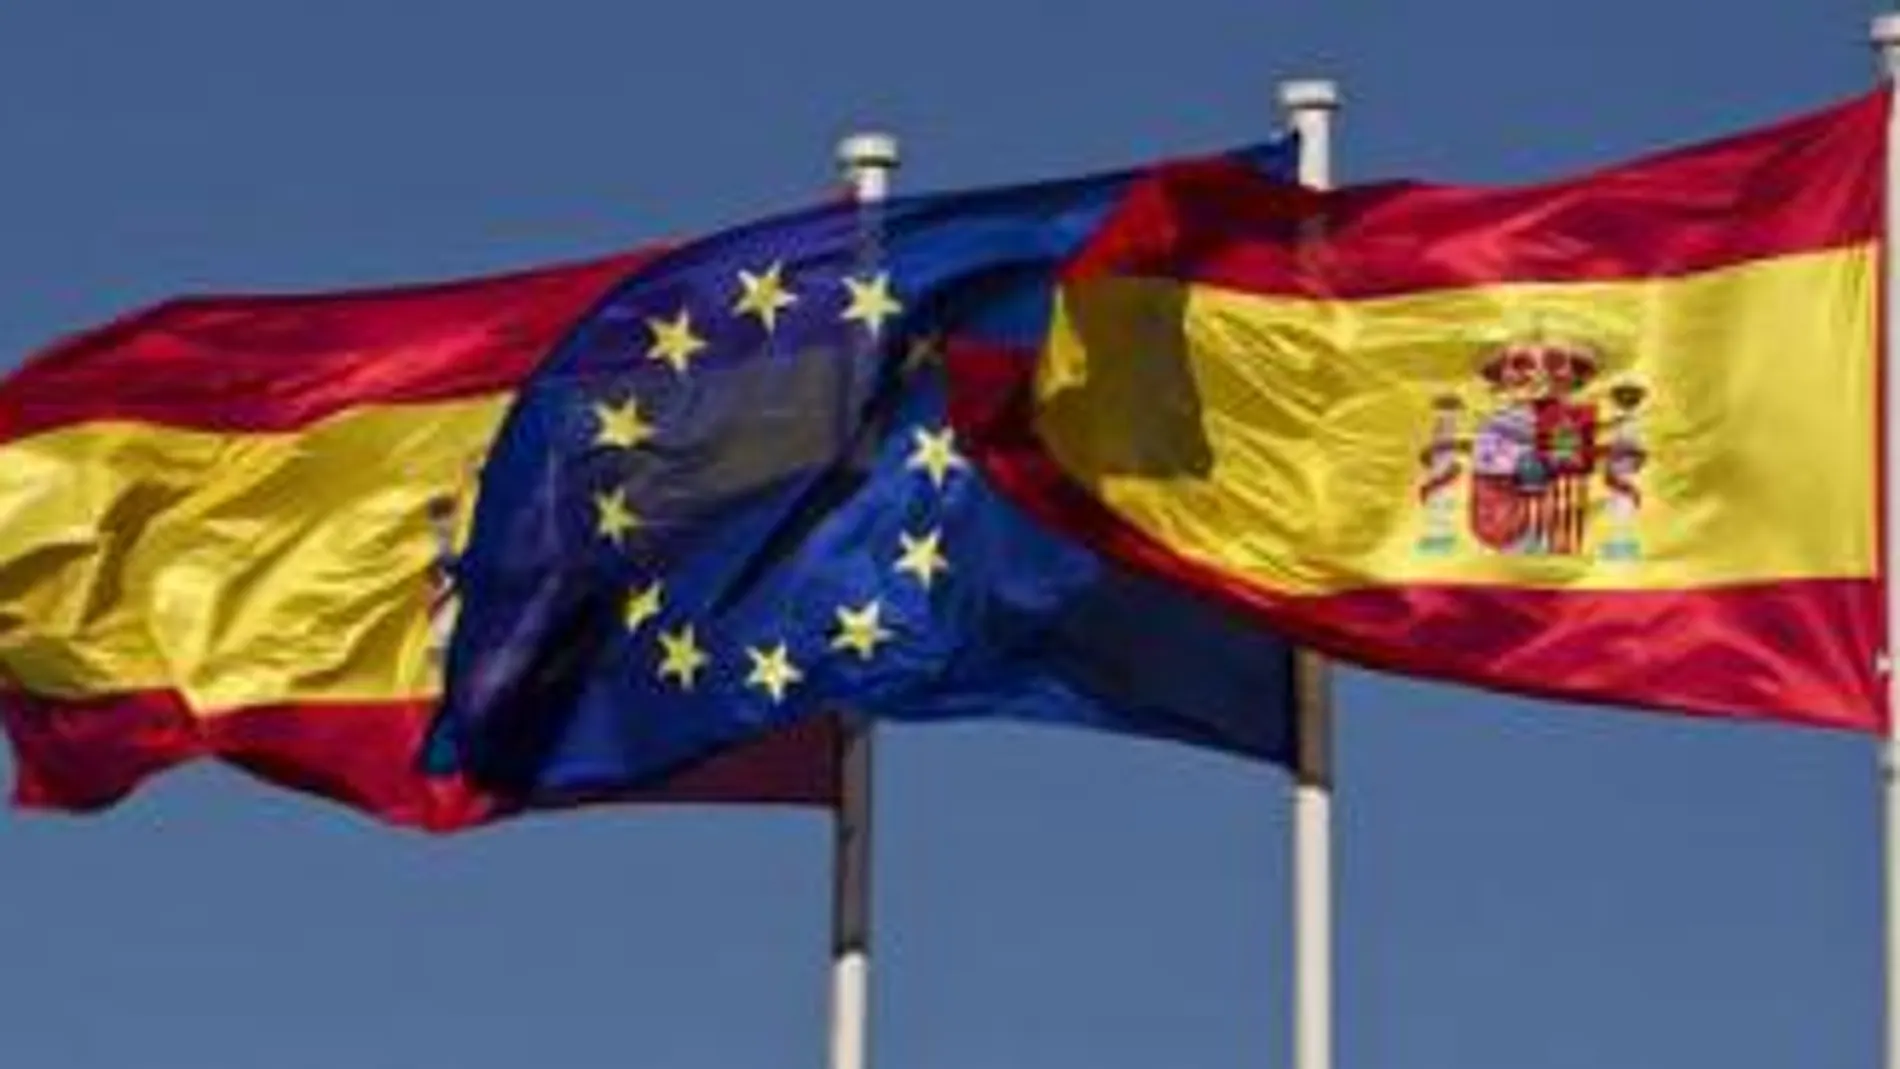 Séptimas elecciones europeas en España